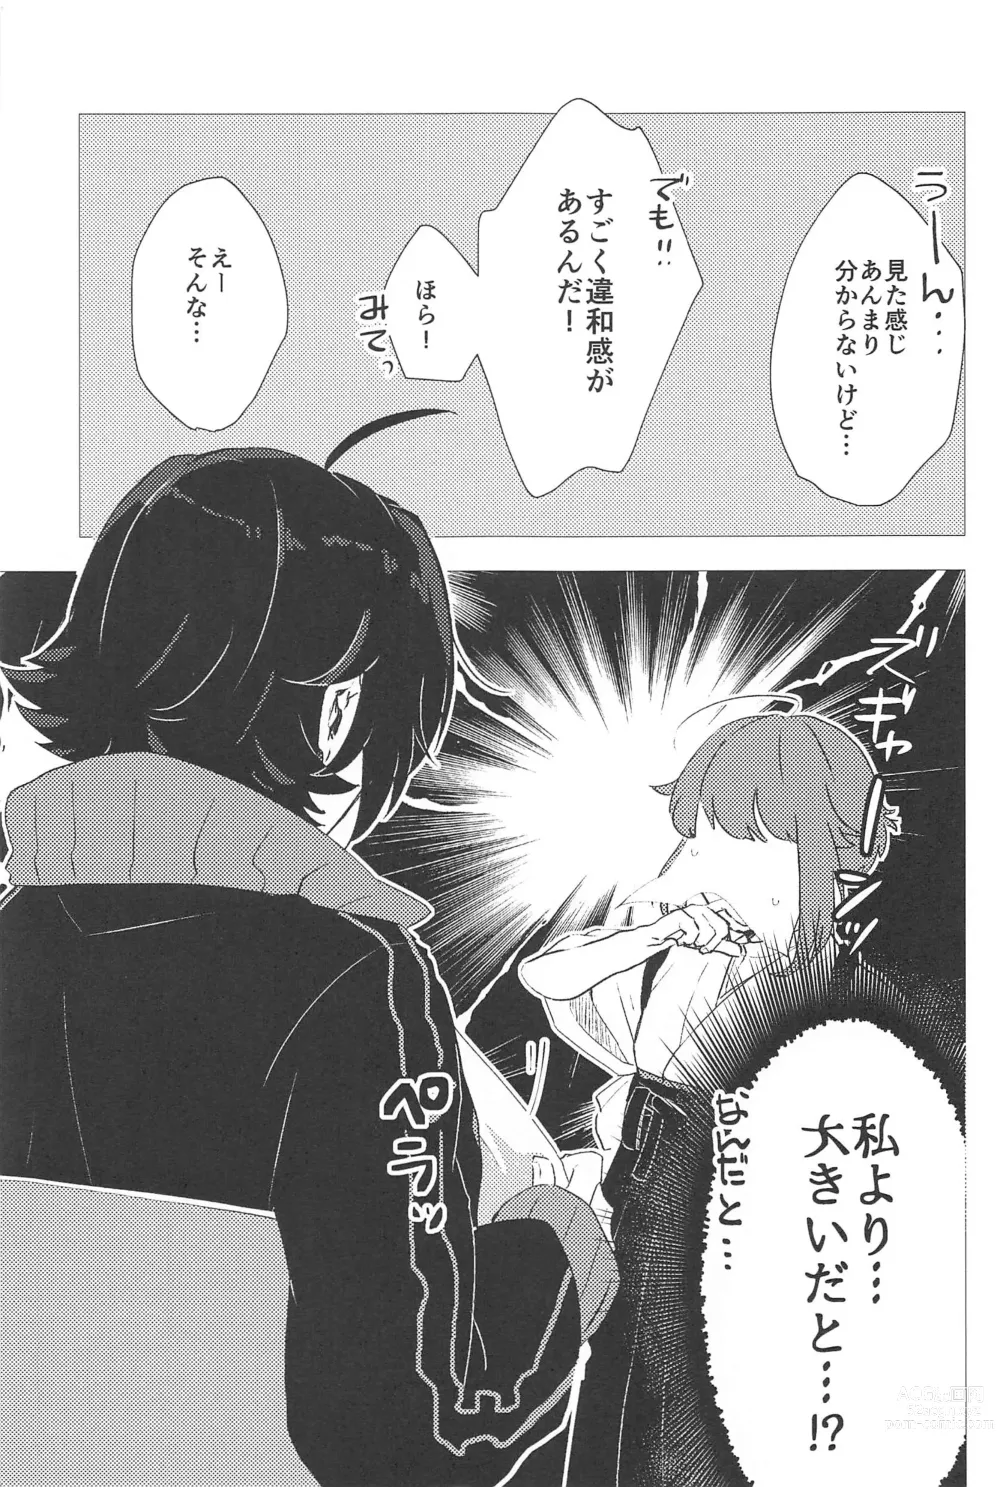 Page 8 of doujinshi Konnanotte Nai!